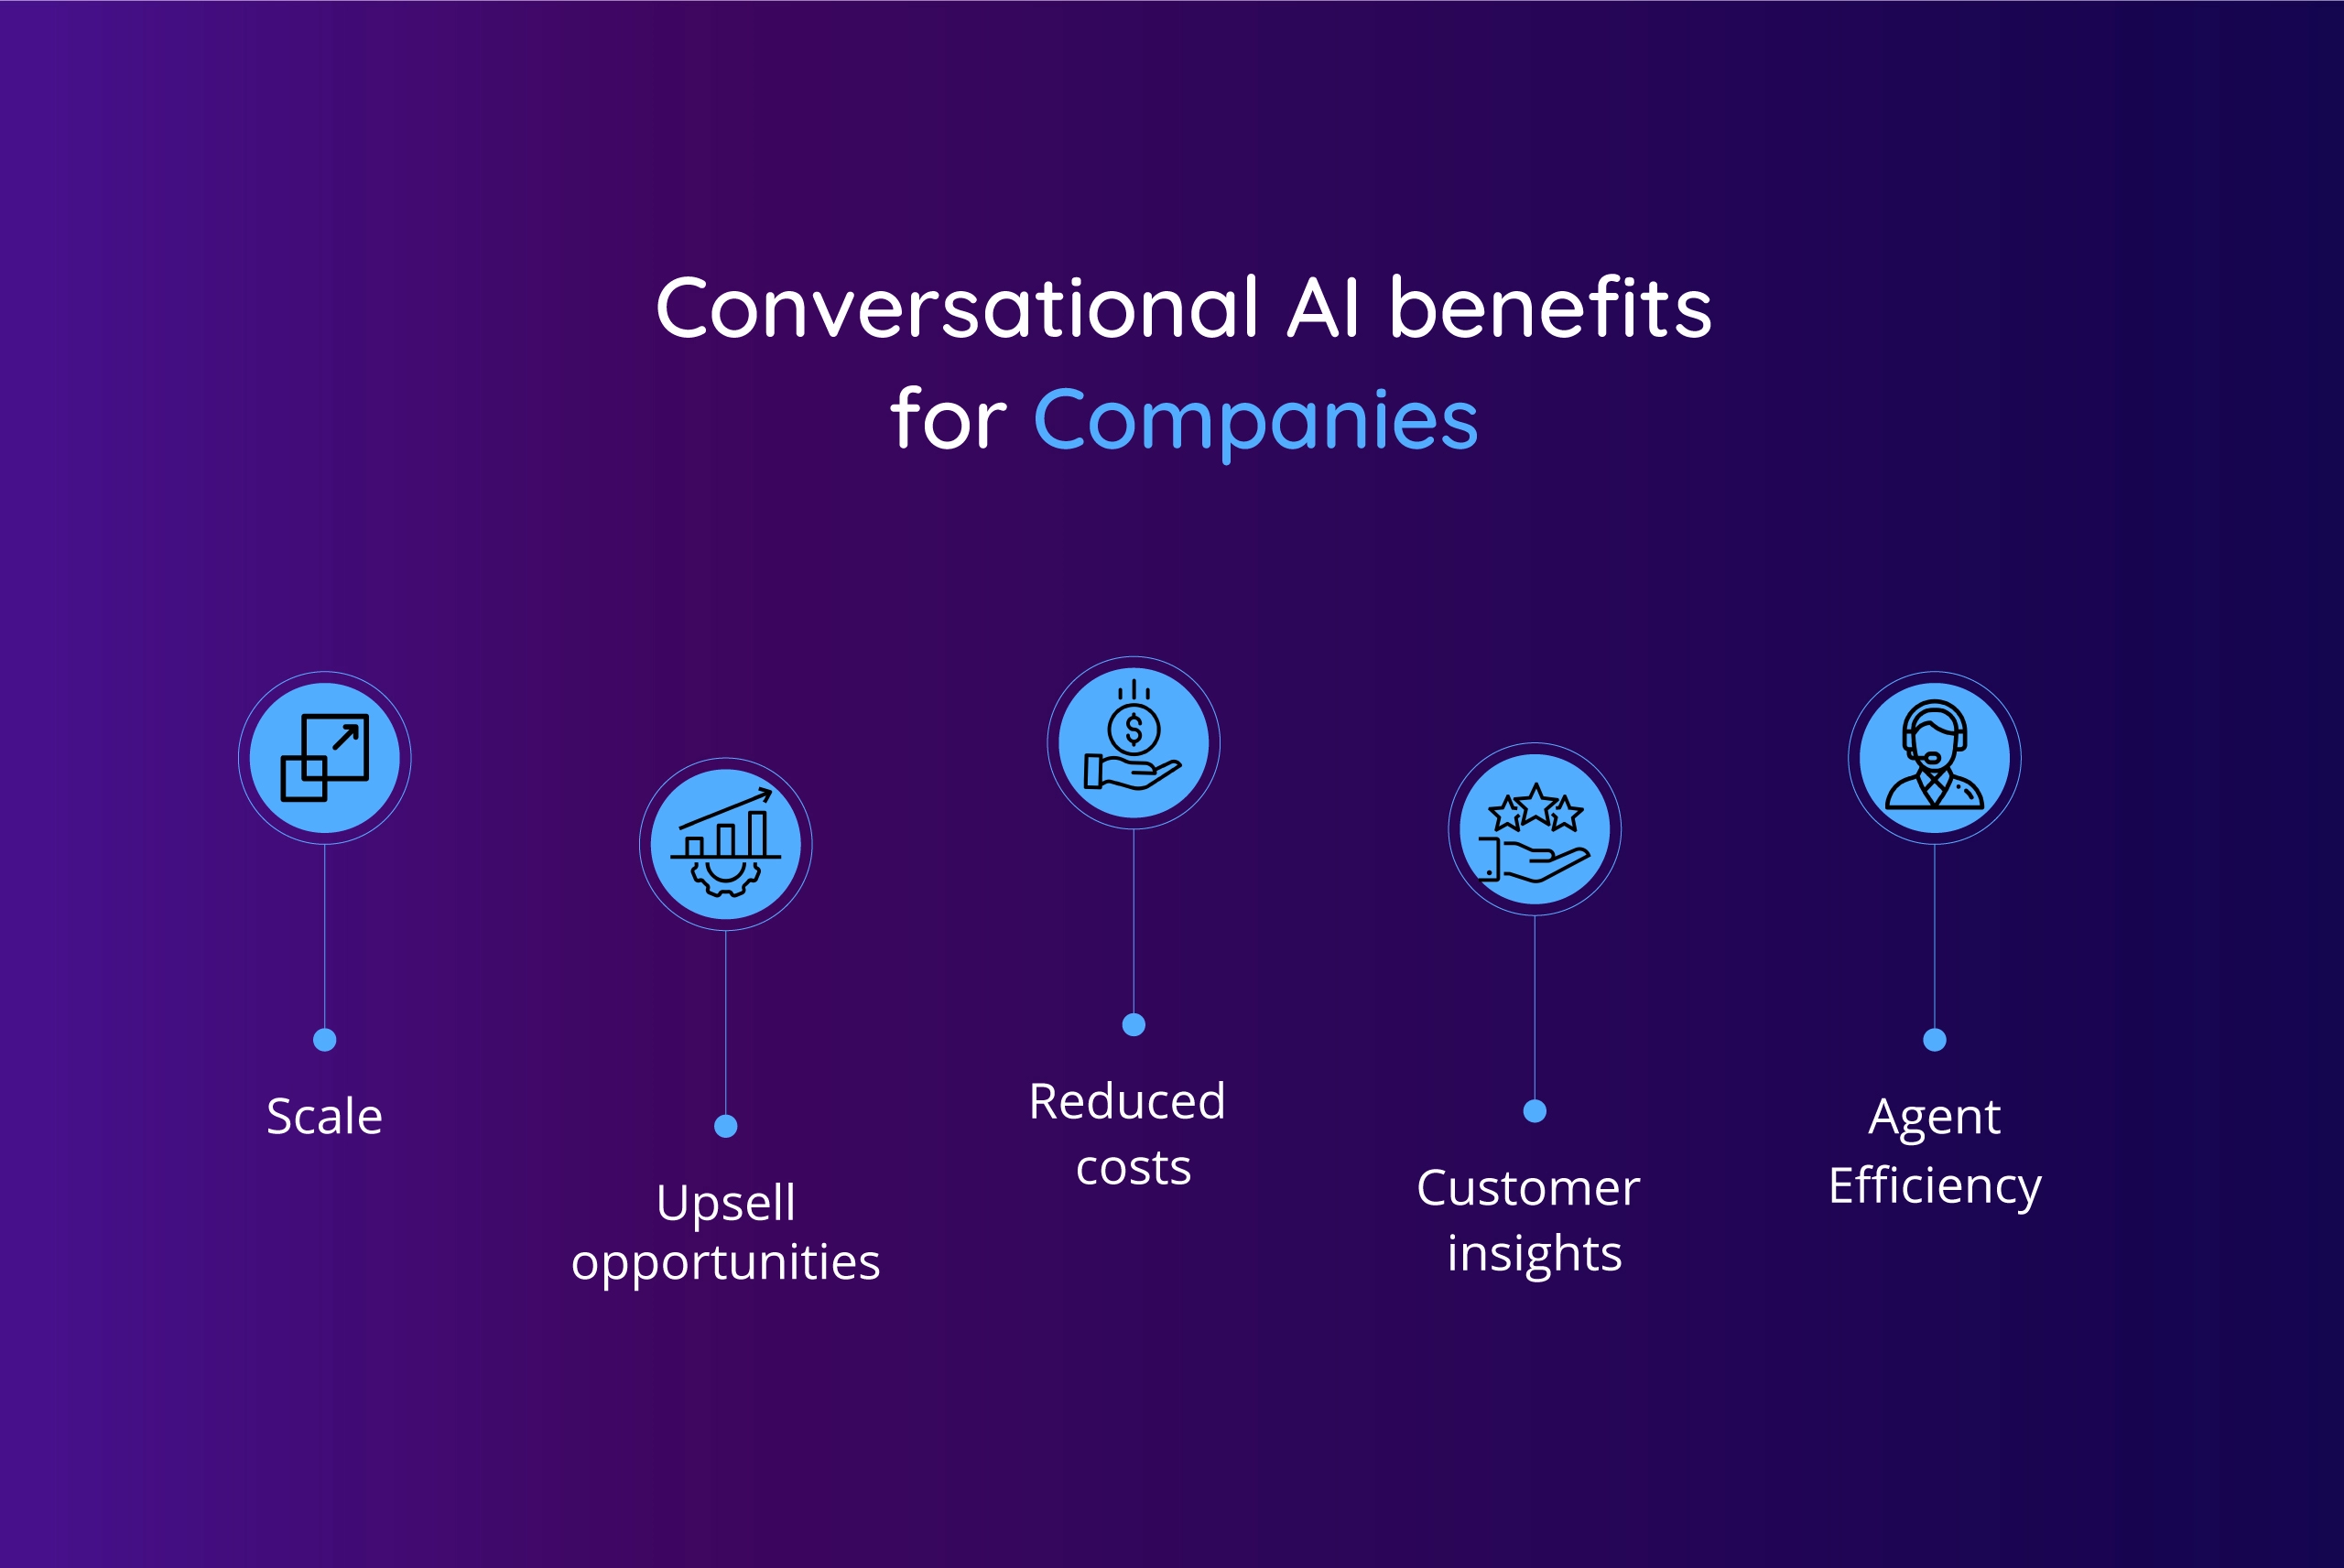 Conversational AI benefits for companies